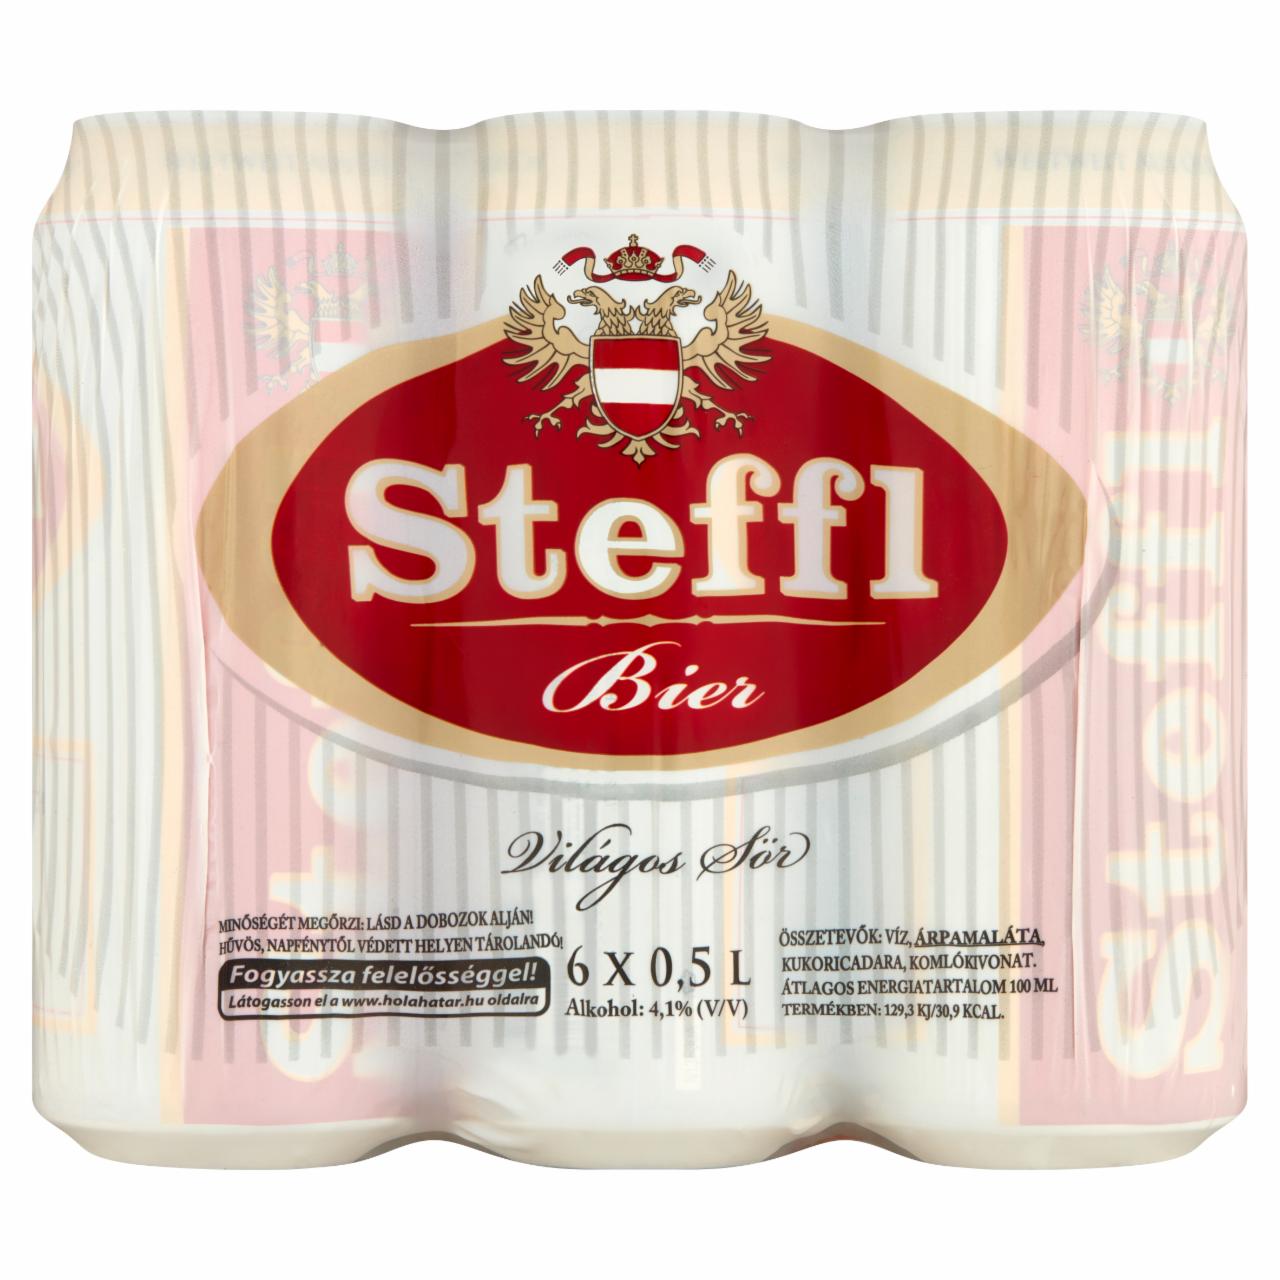 Képek - Steffl világos sör 4,1% 6 x 0,5 l doboz